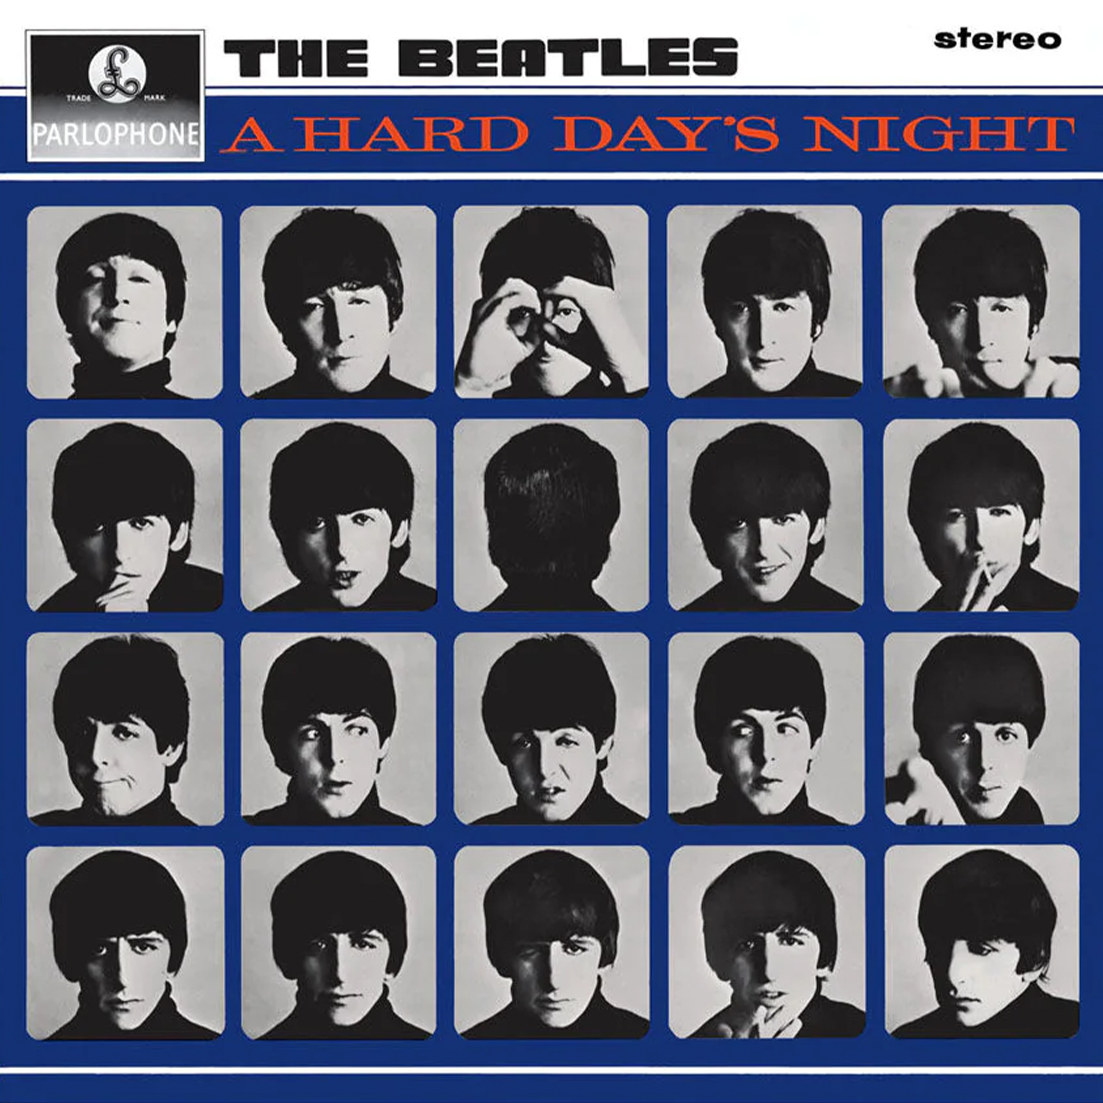 The Beatles - A Hard Days Night (Stereo 180 Gram Vinyl)